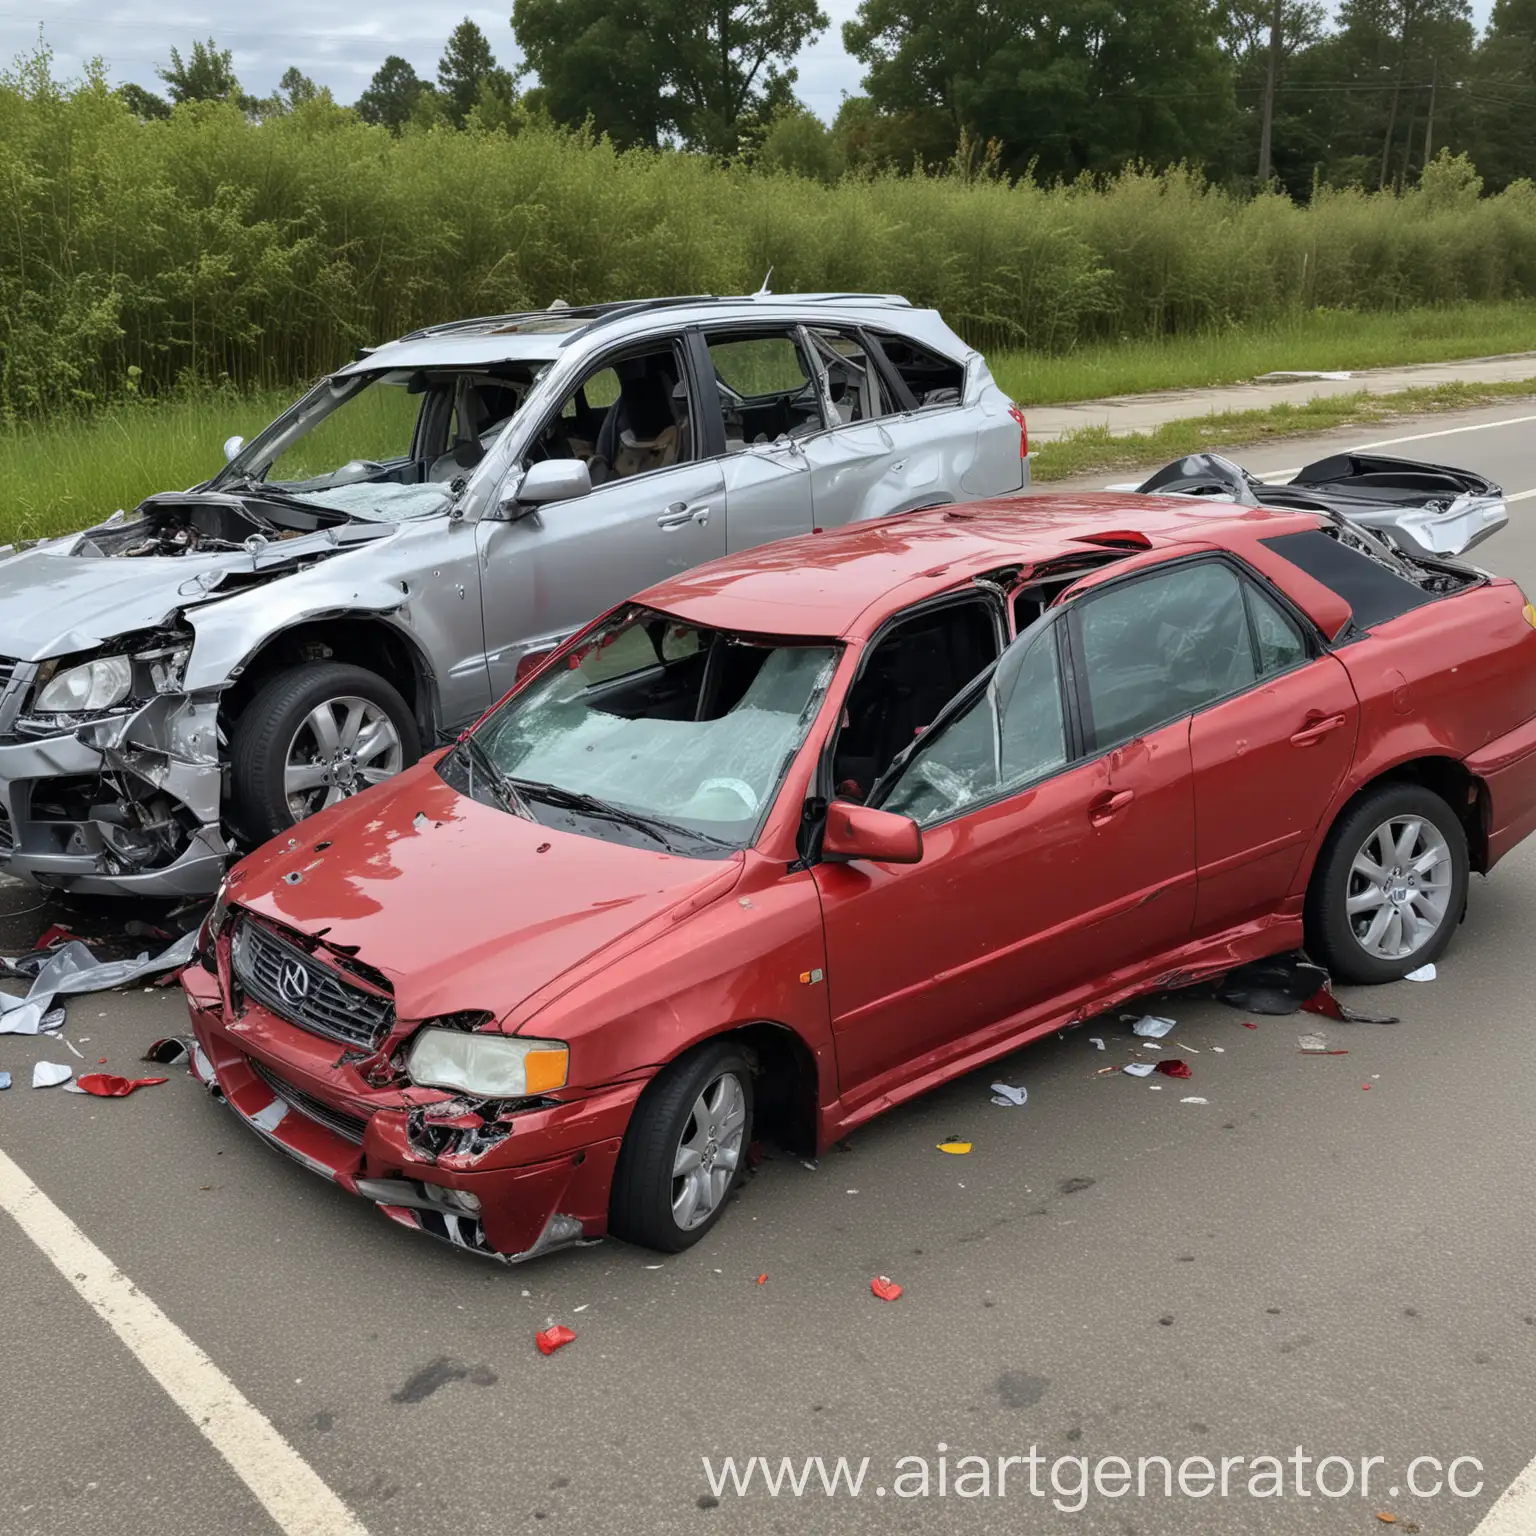 Car-Crash-Red-SUV-Collides-with-Silver-Sedan